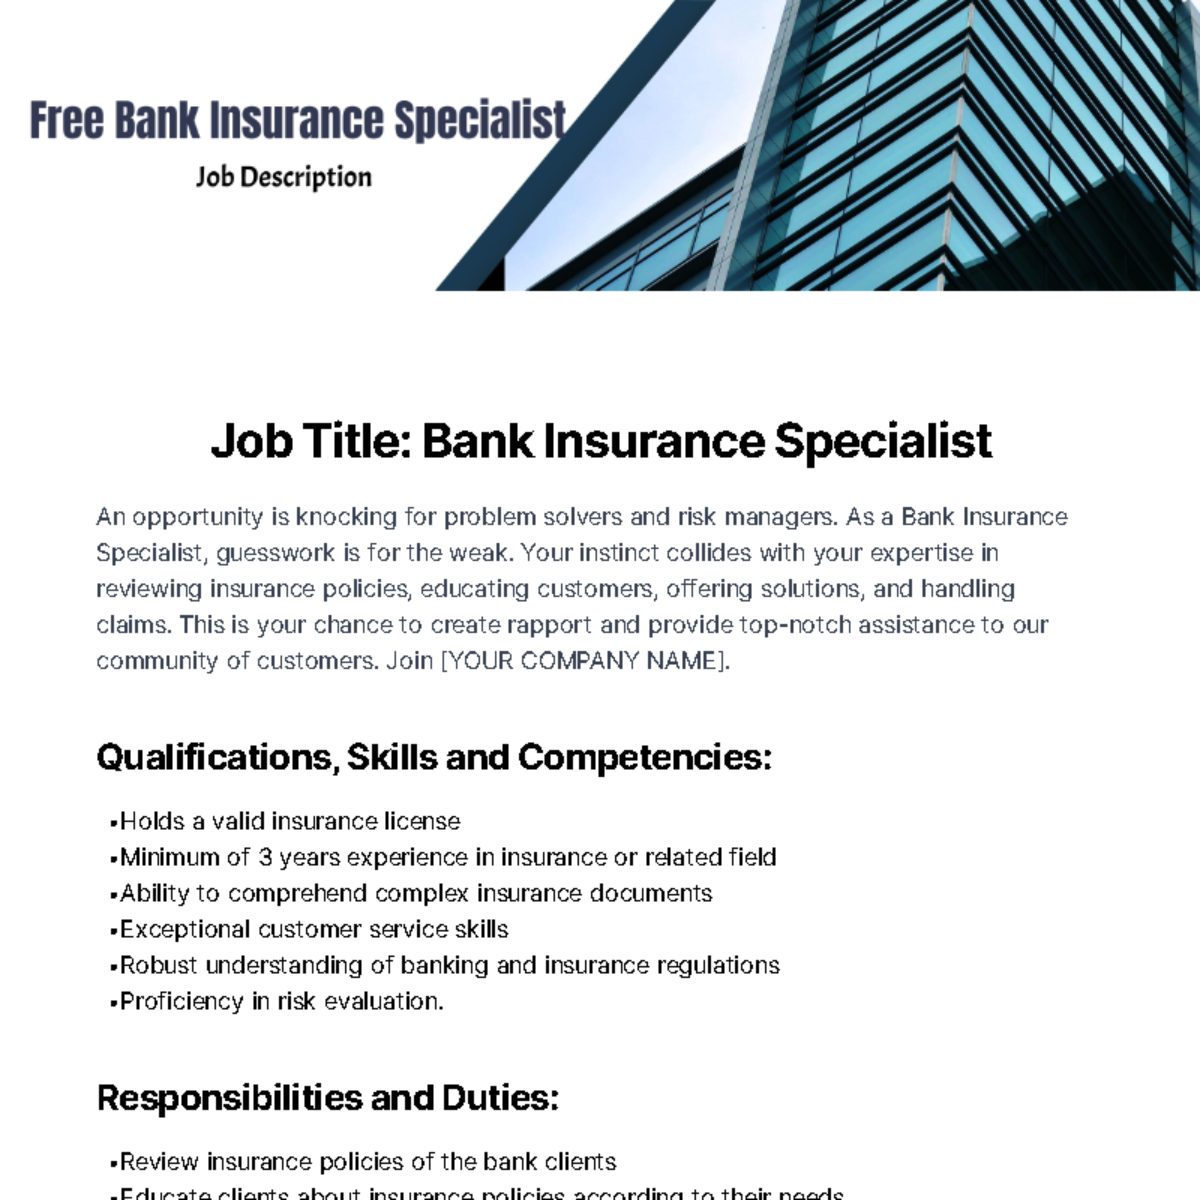 Free Bank Insurance Specialist Job Description Template